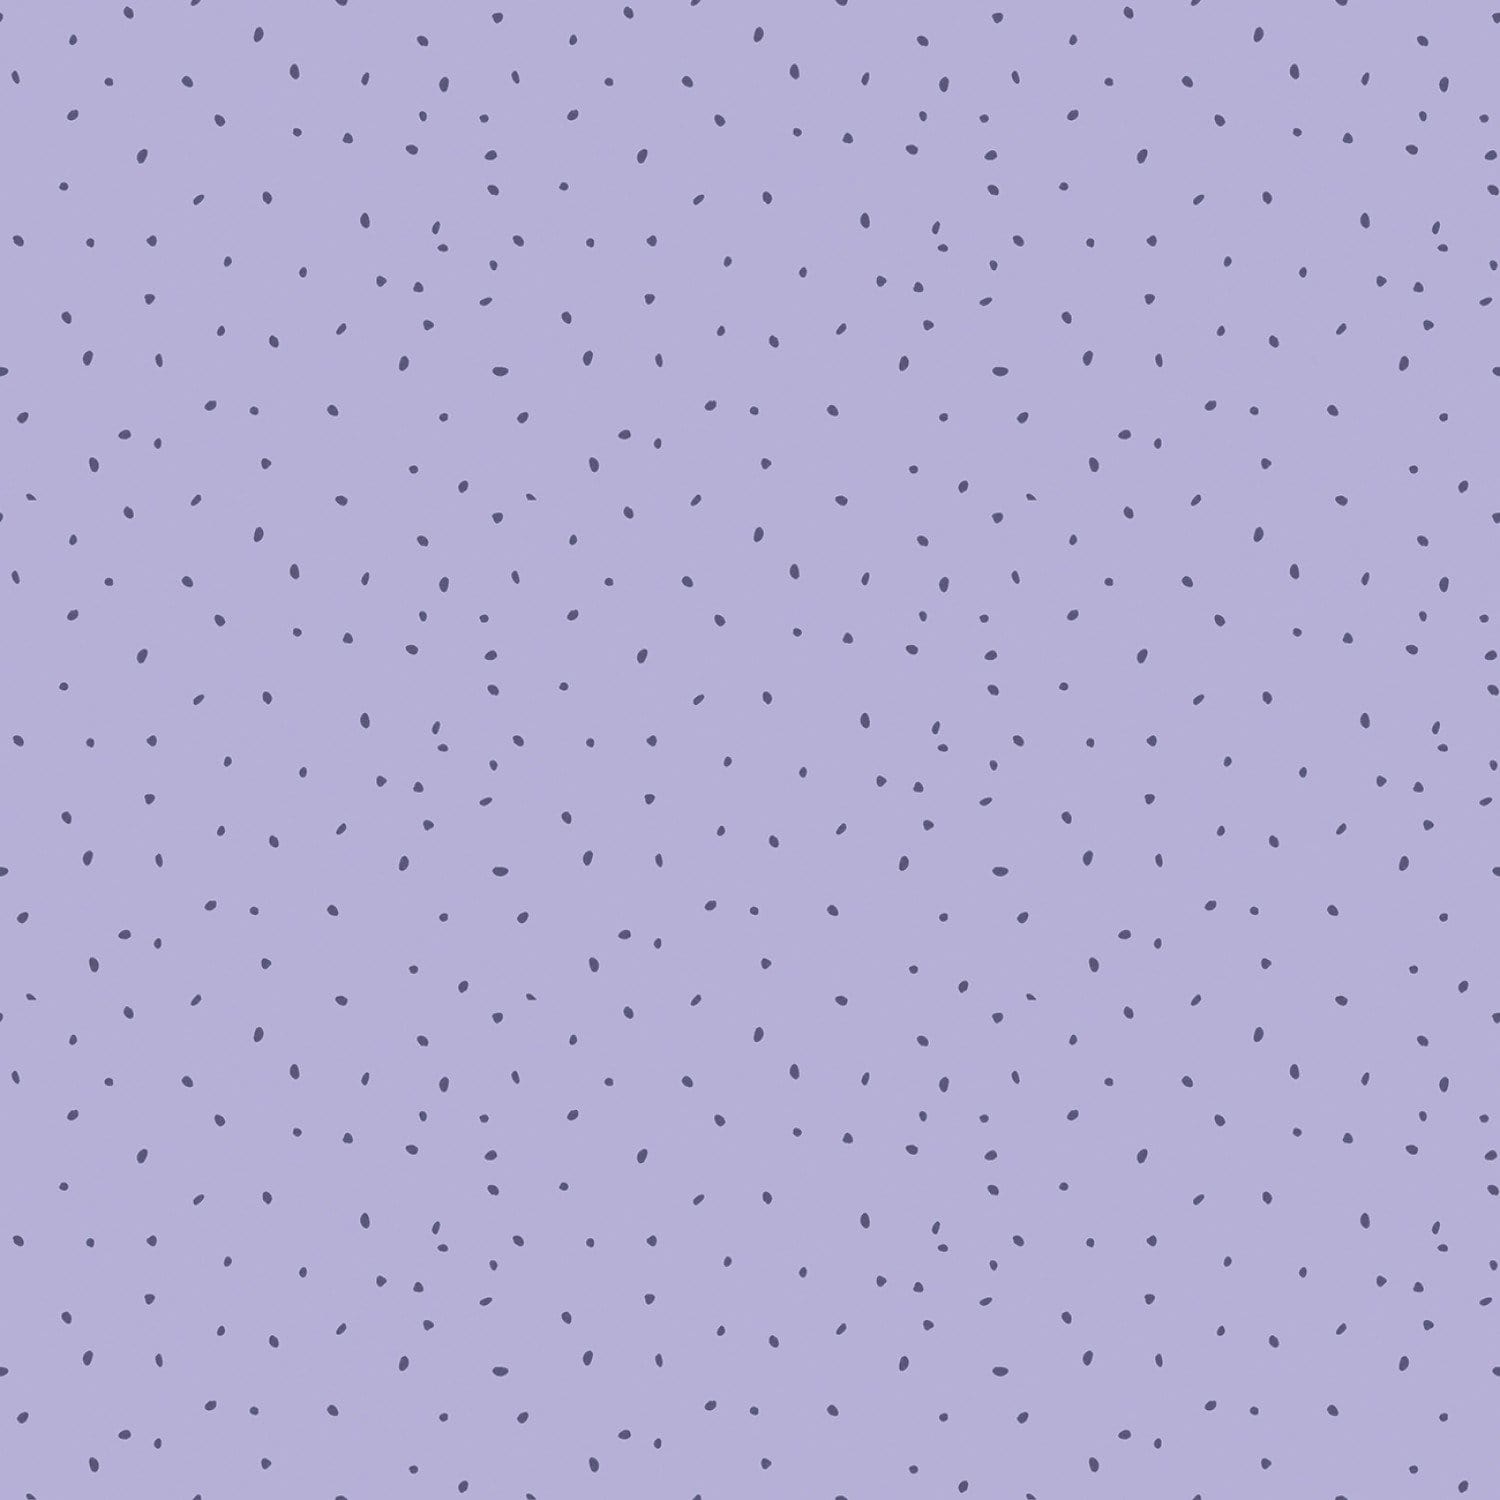 Lucy June Dots Lilac - C11226R-Lilac -  Riley Blake - Flower Prints